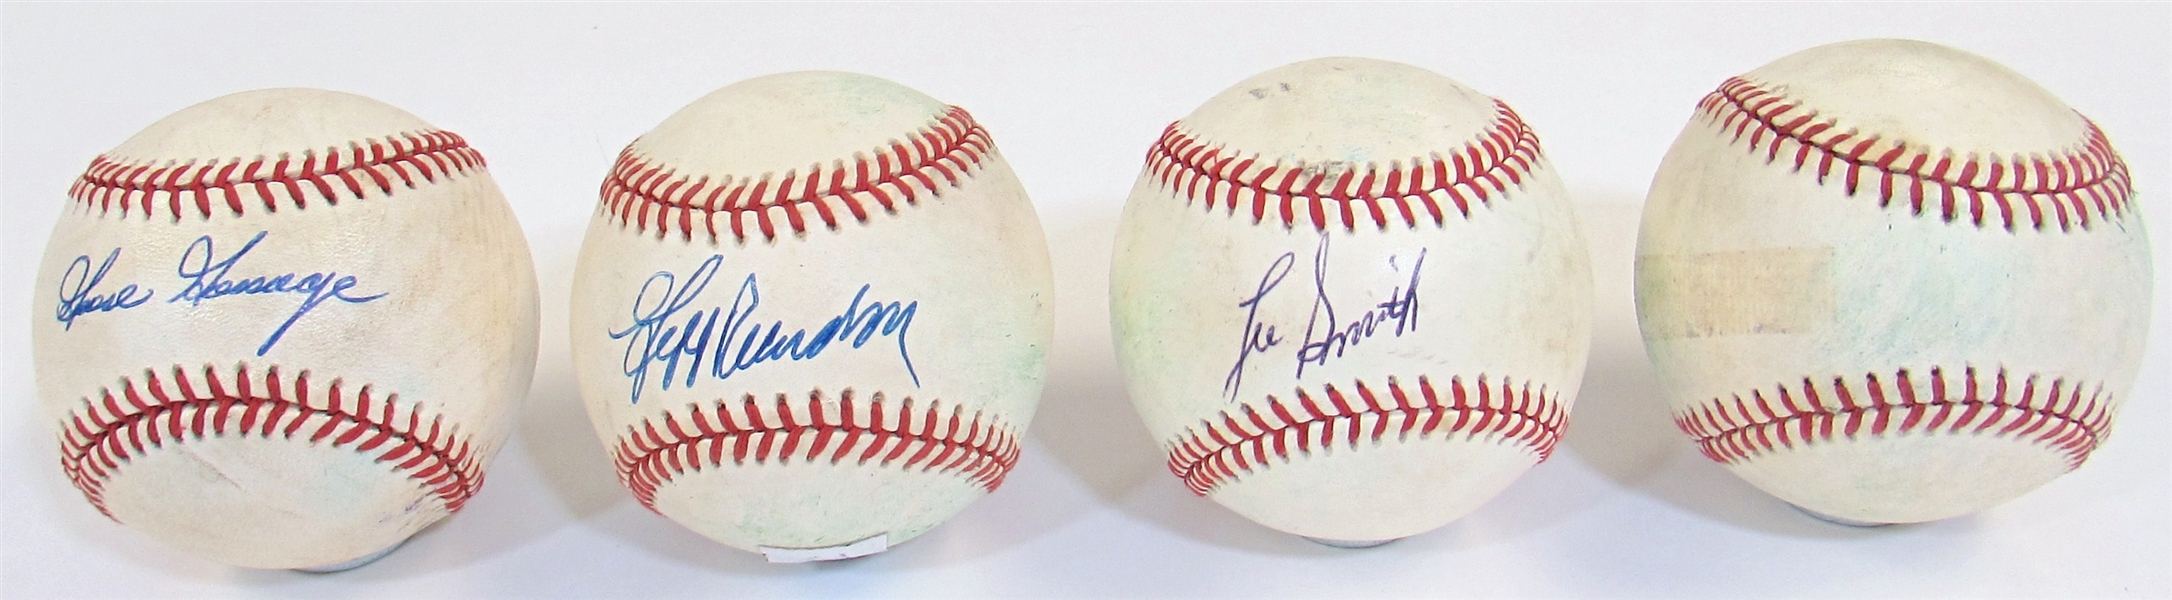 Lot of 4 Single Signed Balls of Closers (Gossage, Reardon, Smith, & M. Davis)